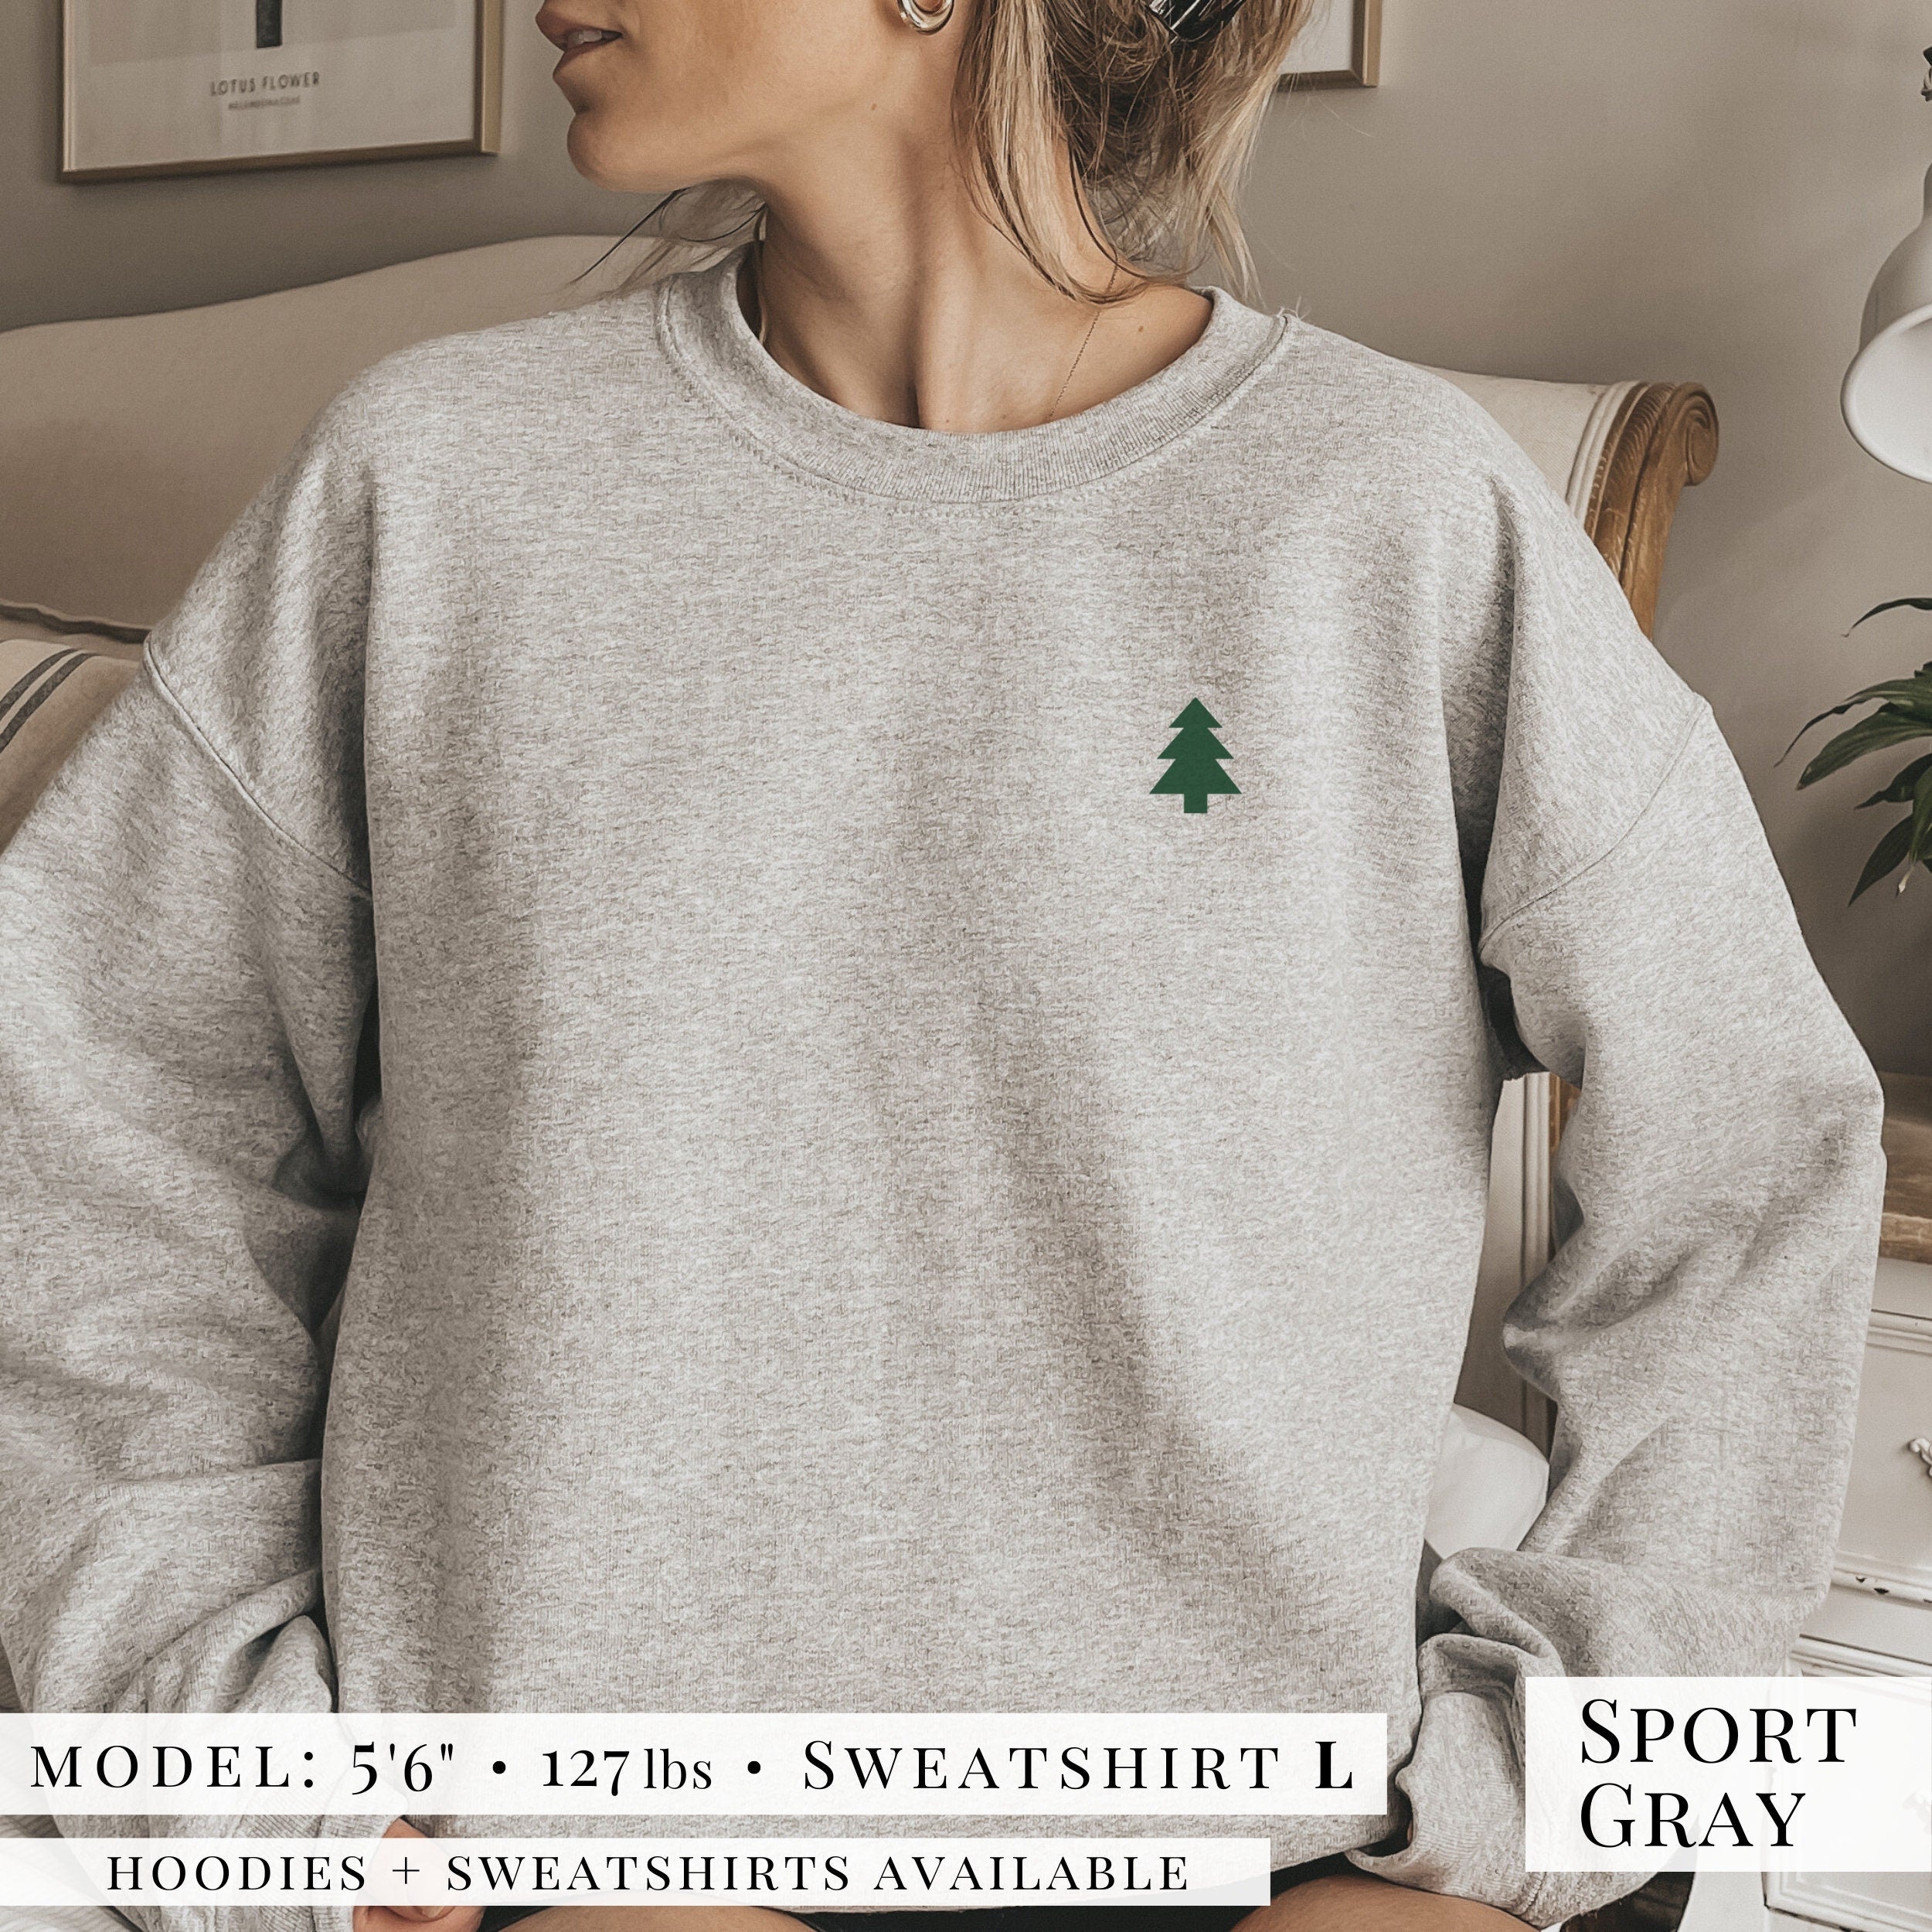 Just a Christmas Tree Sweatshirt